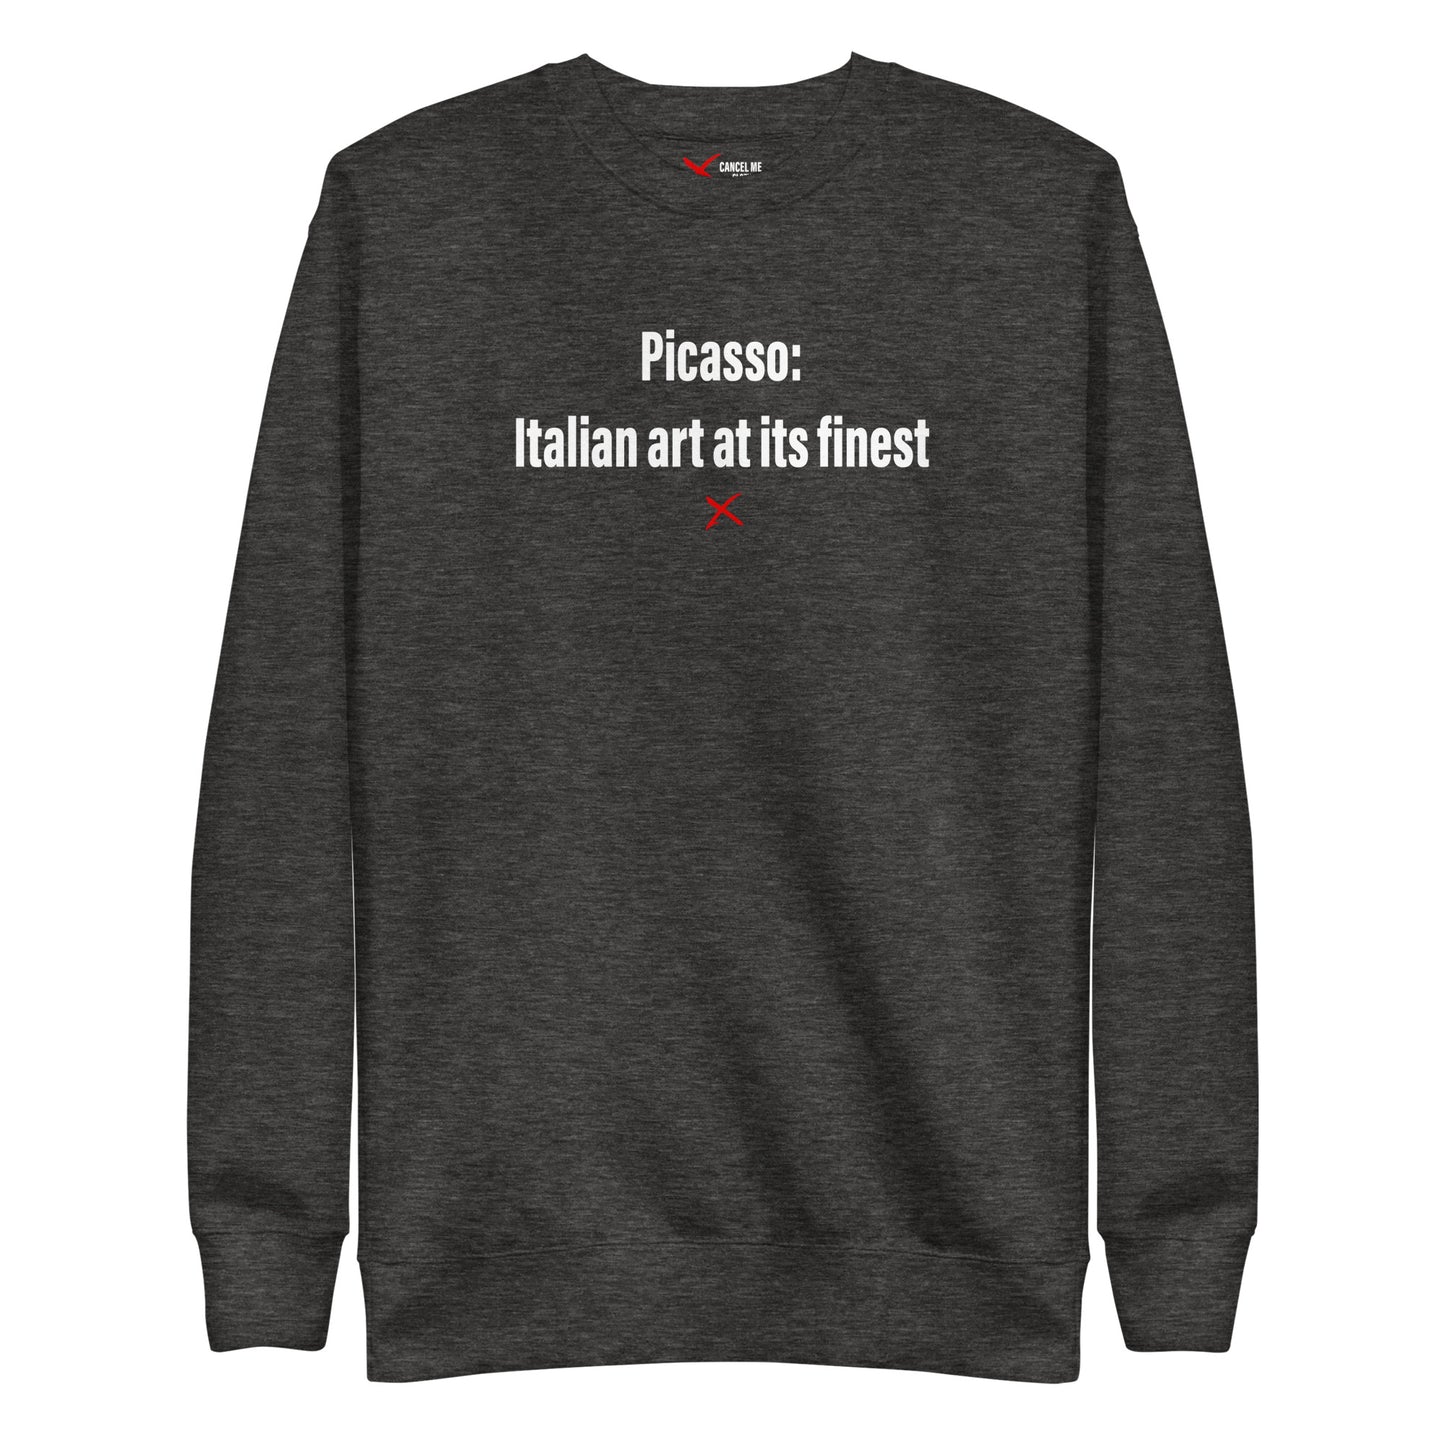 Picasso: Italian art at its finest - Sweatshirt